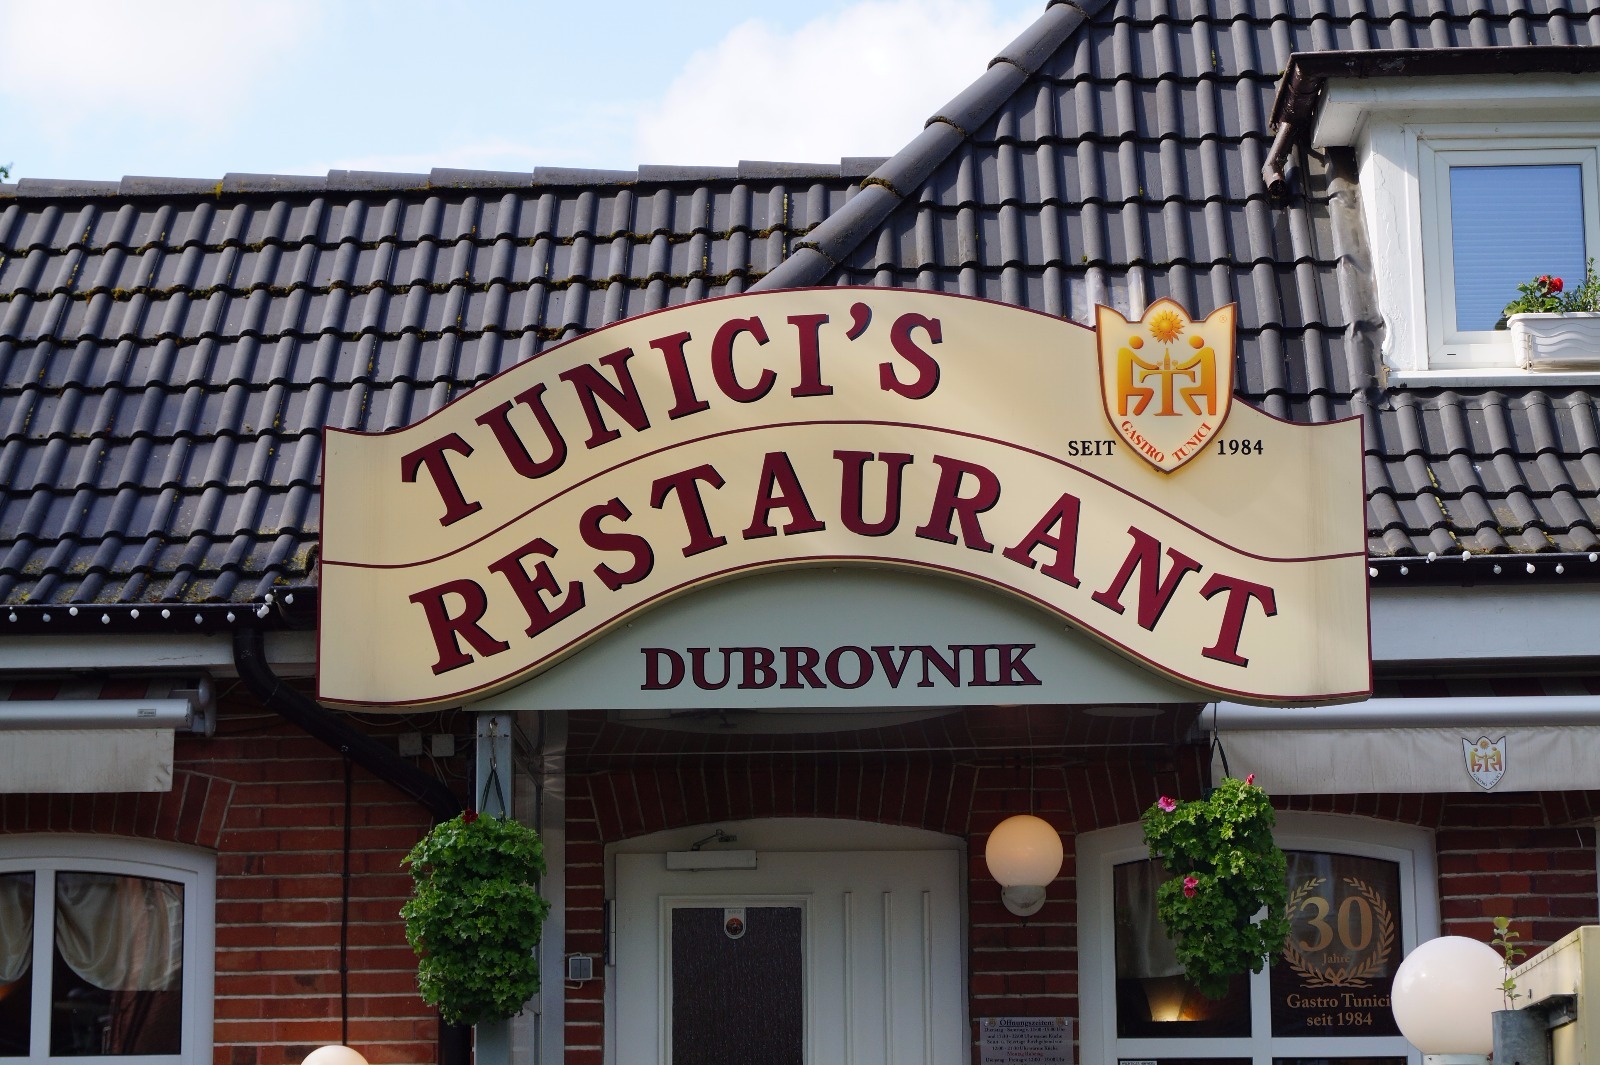 Bild 2 Tunici's Restaurant Dubrovnik in Ahrensburg